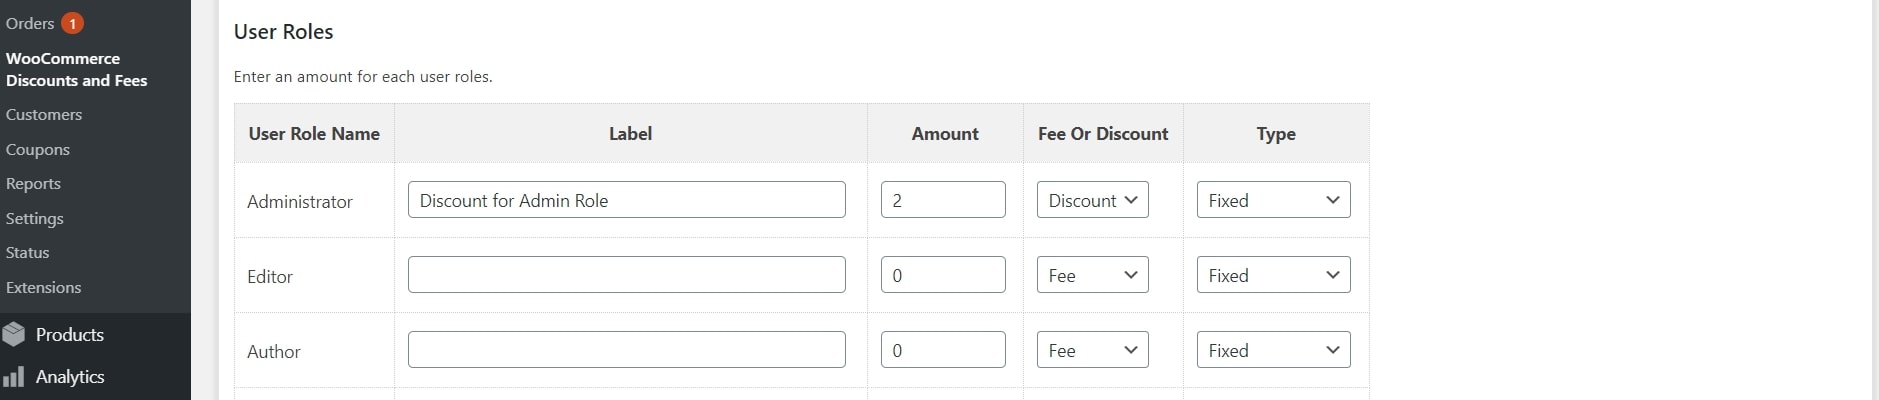 WooCommerce Advanced Discounts and Fees - 3